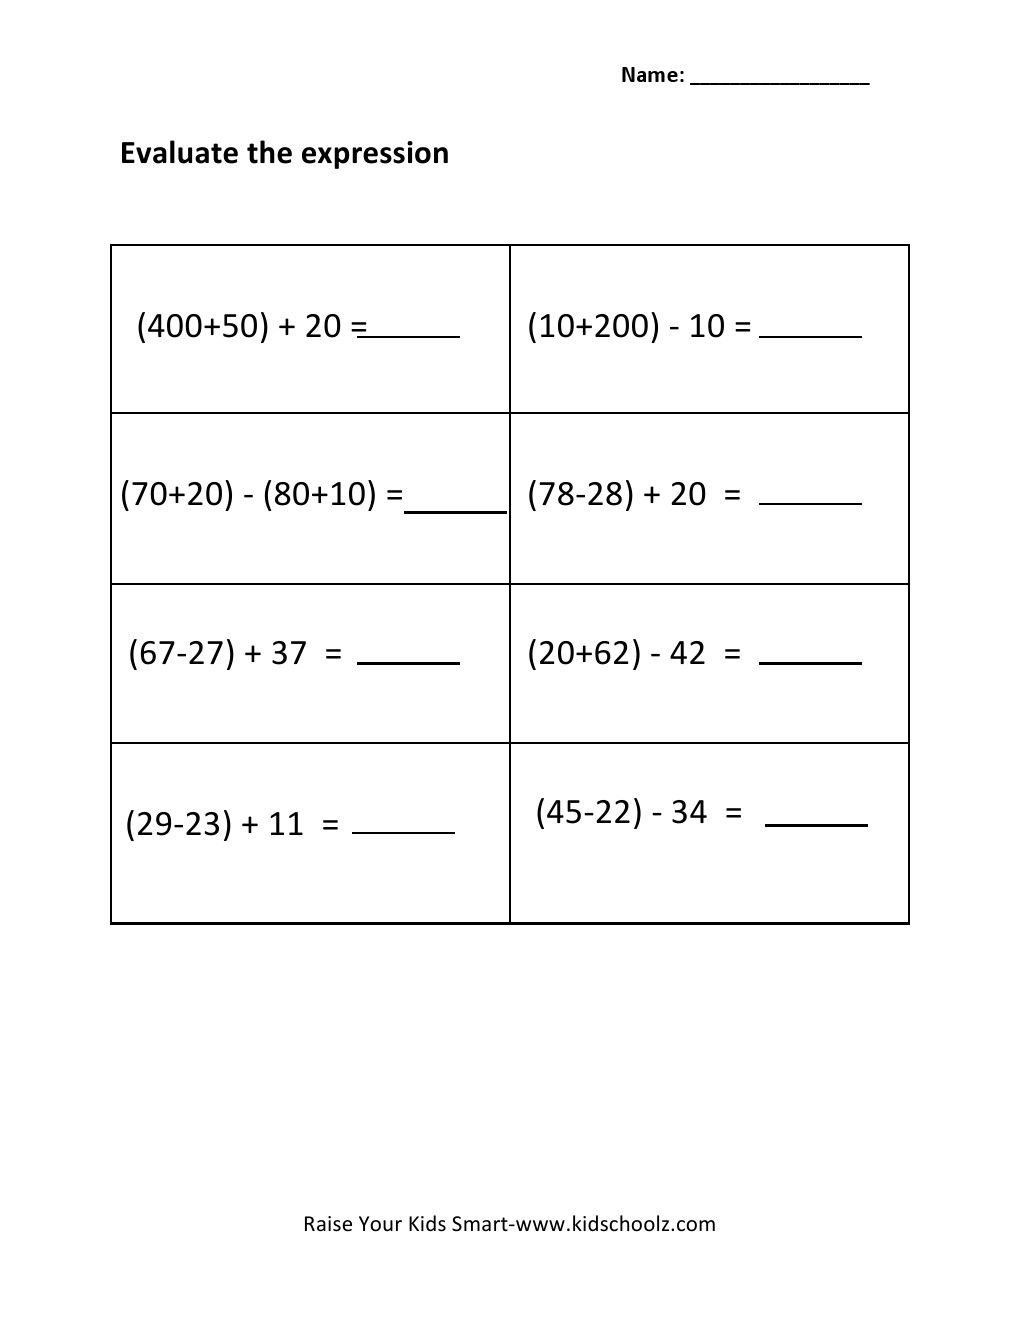 Evaluate the Expression Worksheet Evaluating Expressions Worksheet Pdf A Worksheet is Really